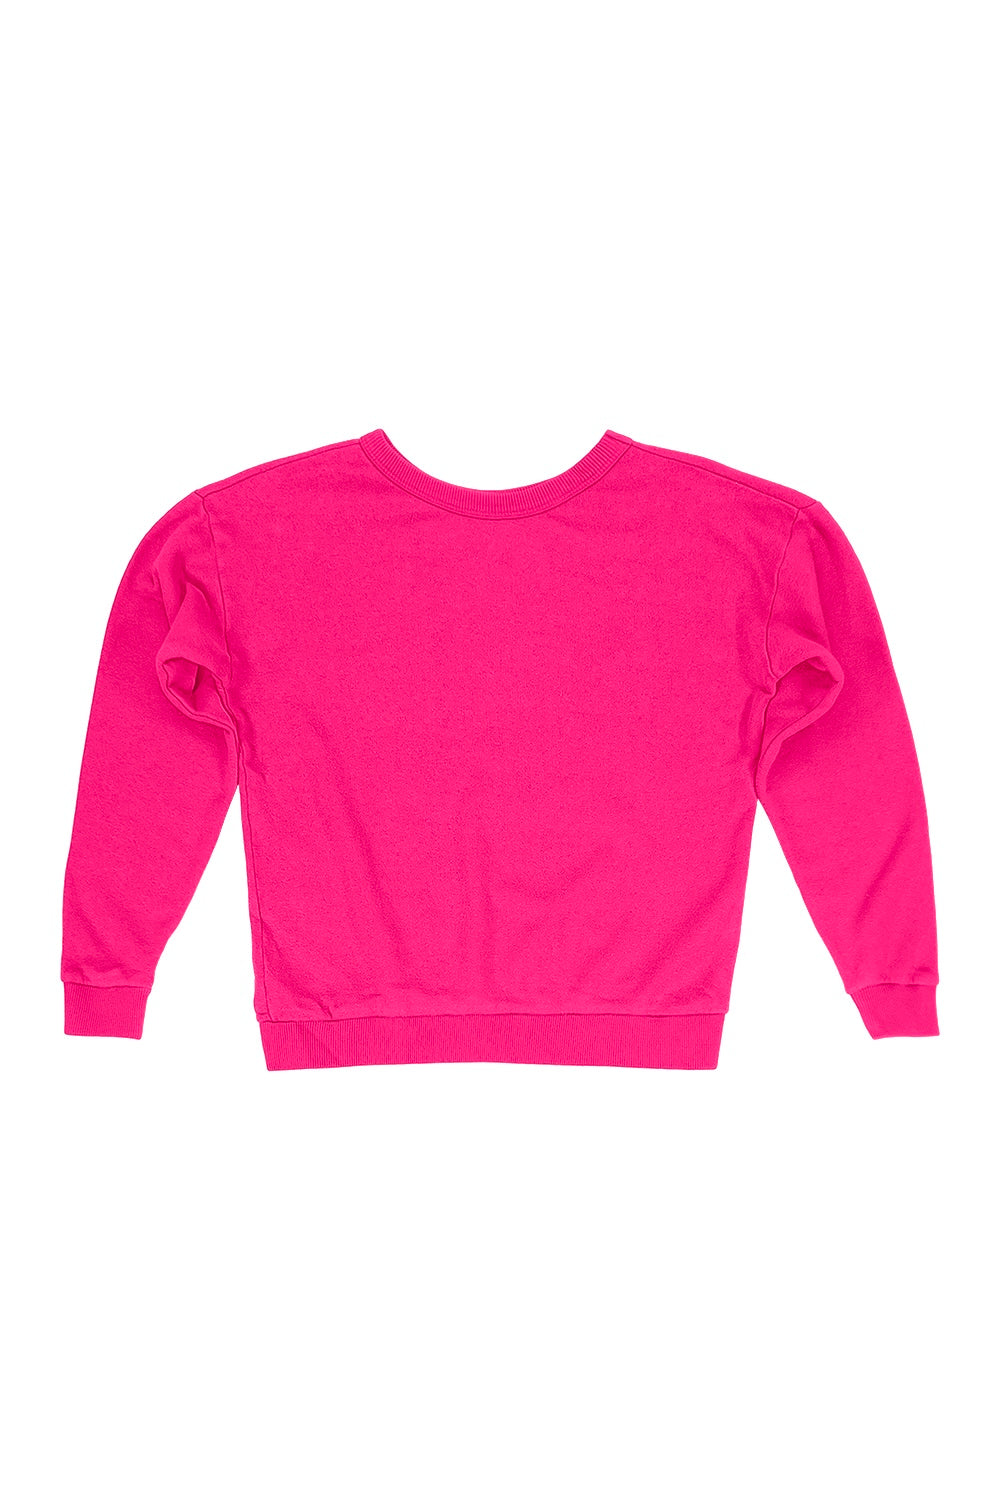 Crux Cropped Sweatshirt | Jungmaven Hemp Clothing & Accessories / Color: Pink Grapefruit